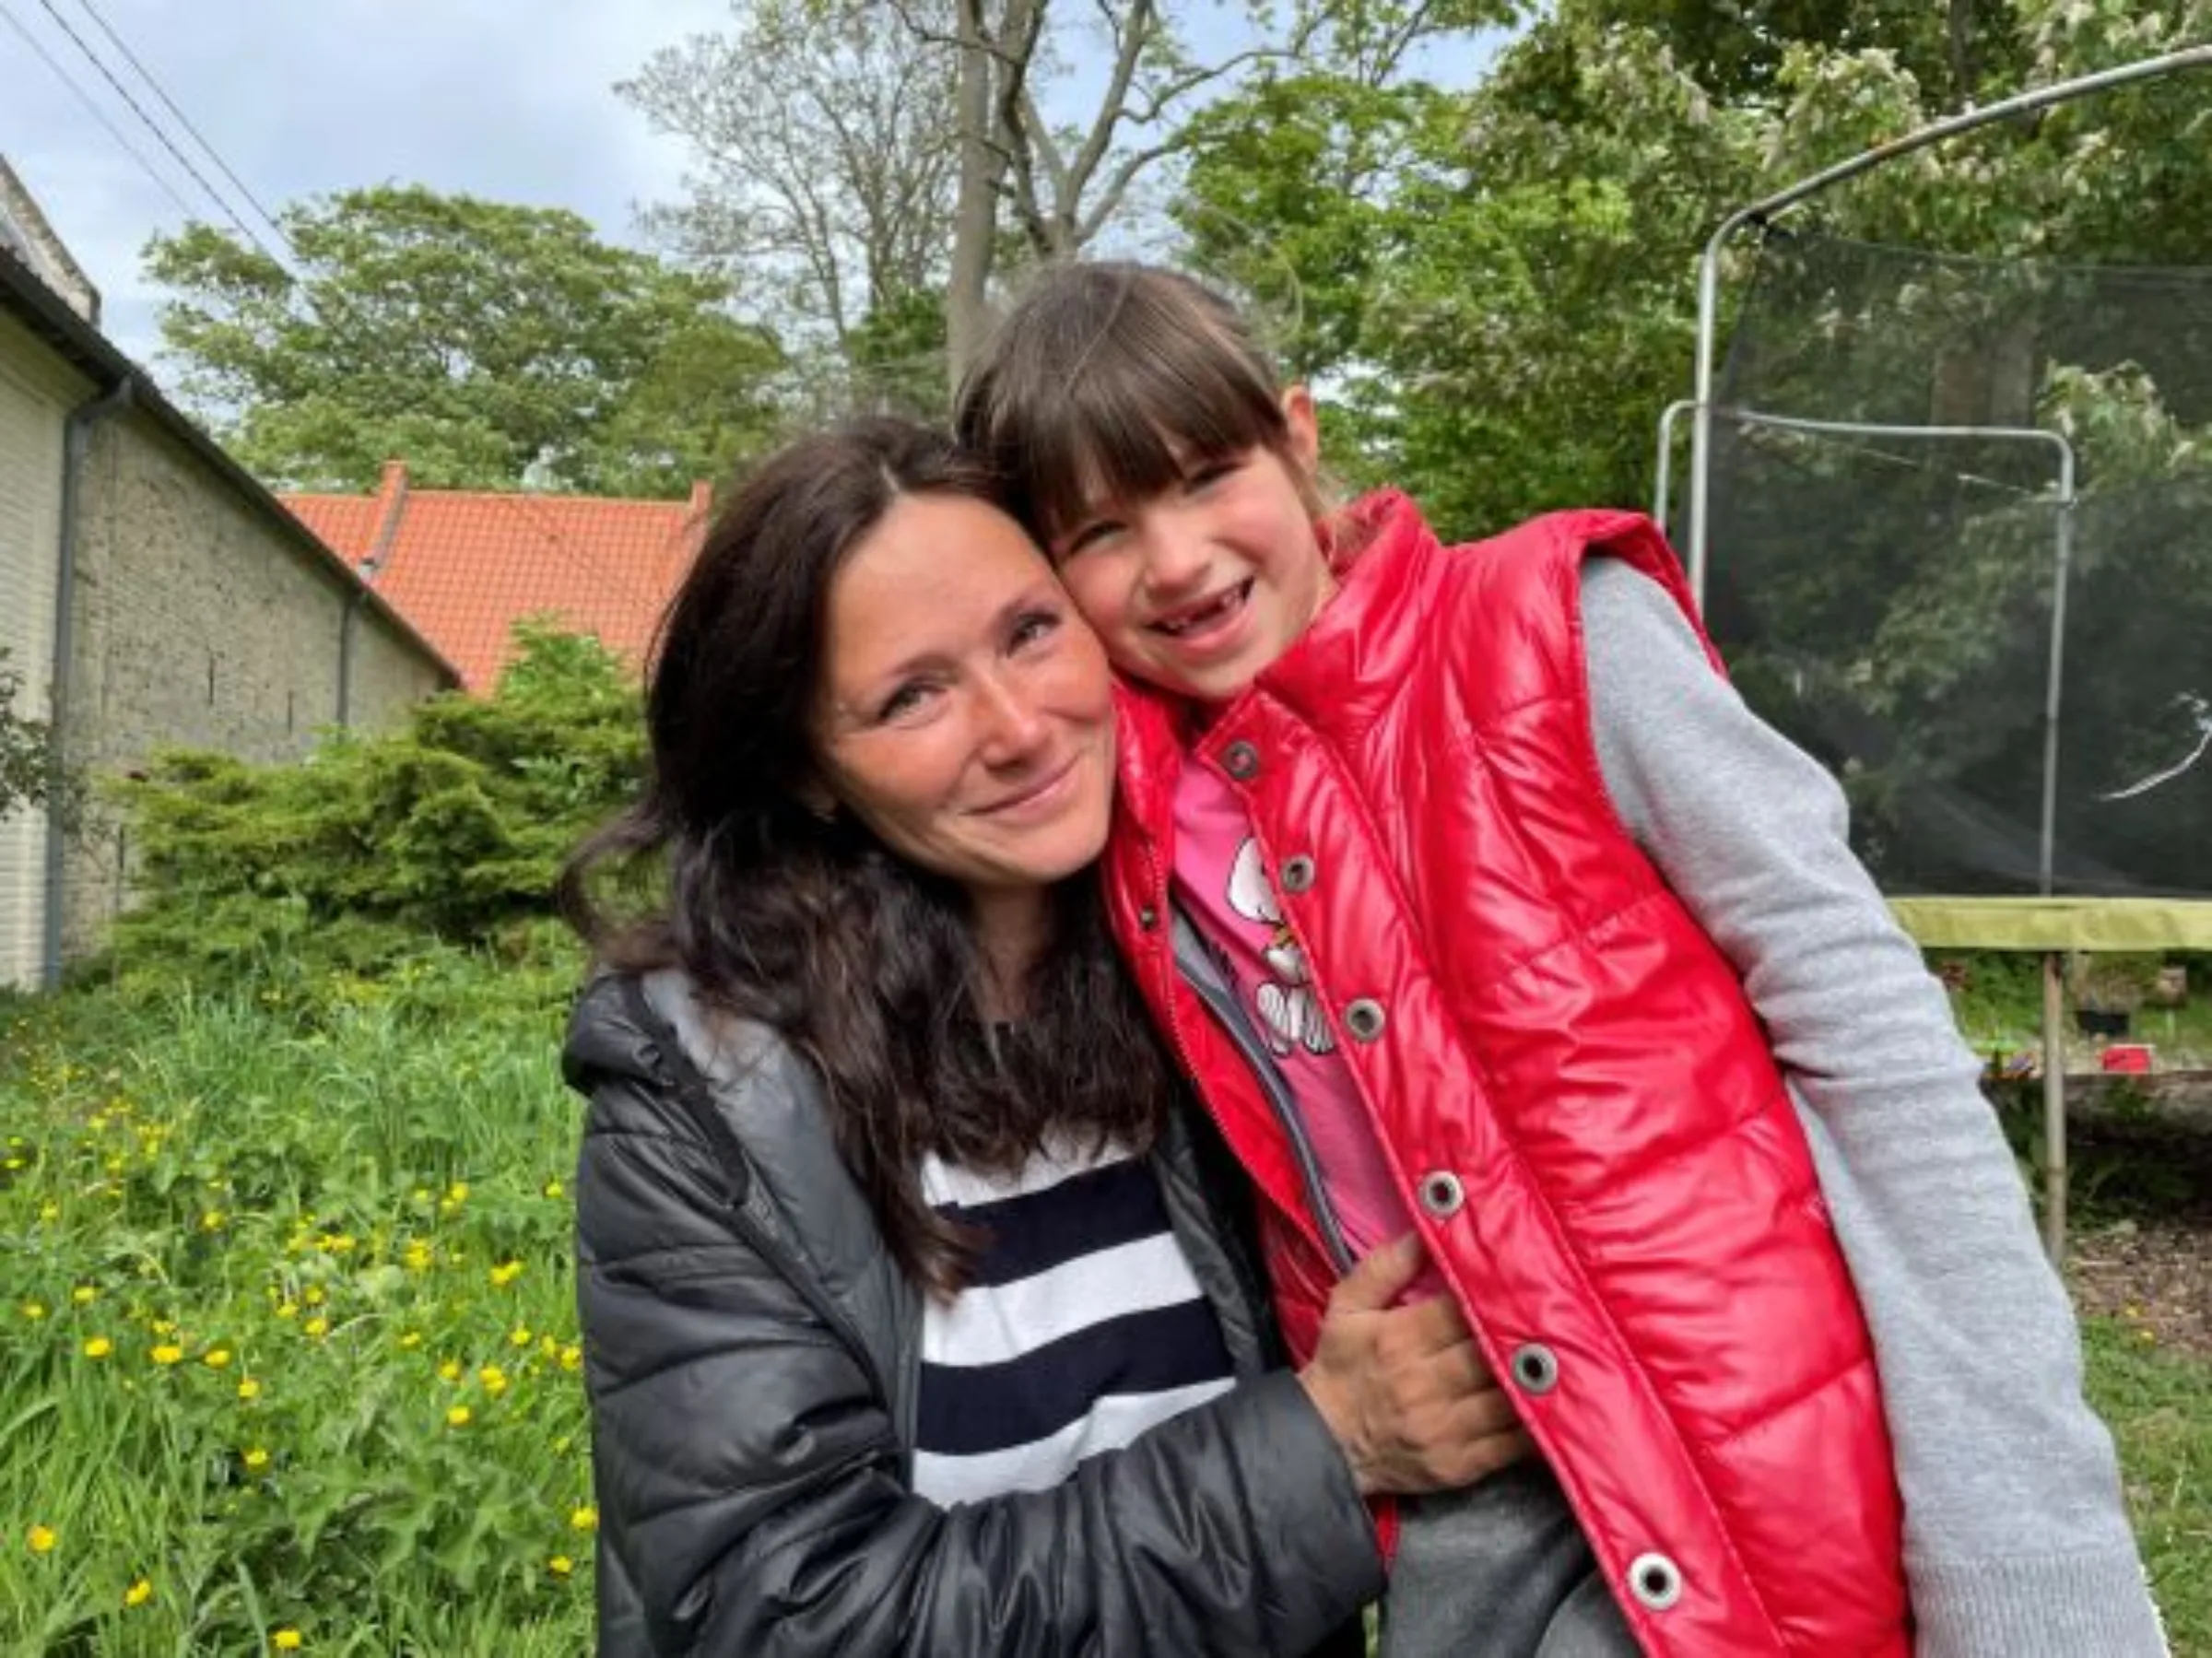 Yulia Ostrovksa and daughter Veronika, 7, at the farm in Tilques, May 10, 2022. Thomson Reuters Foundation/Emma Batha